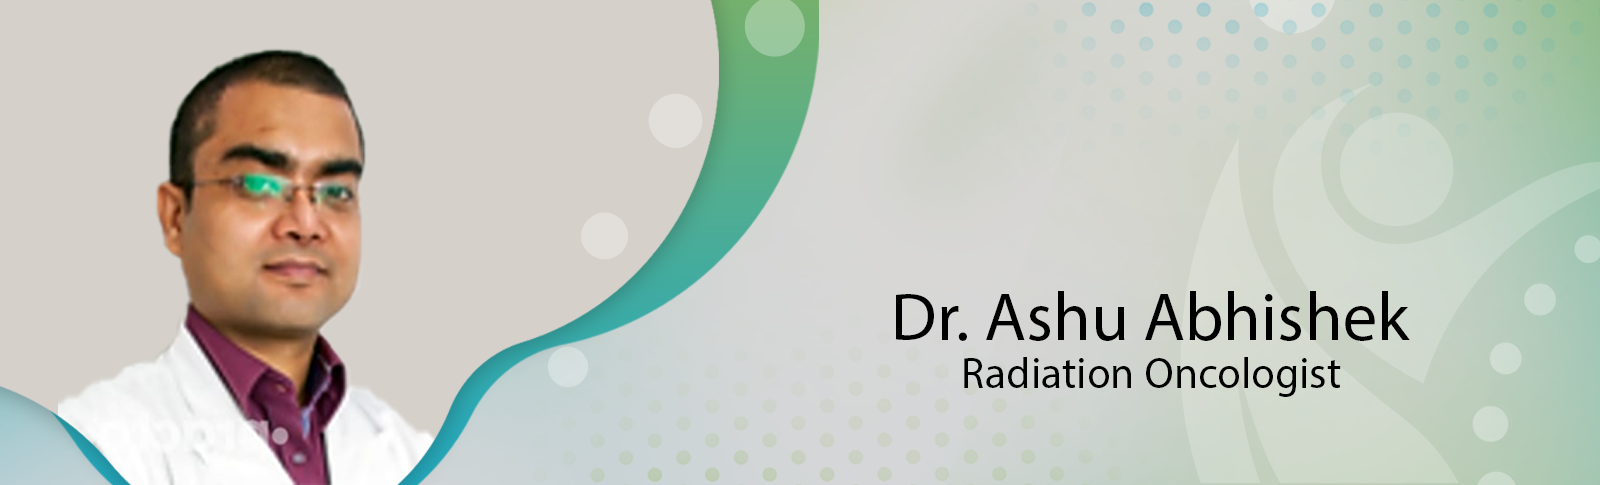 Dr. Ashu Abhisehk